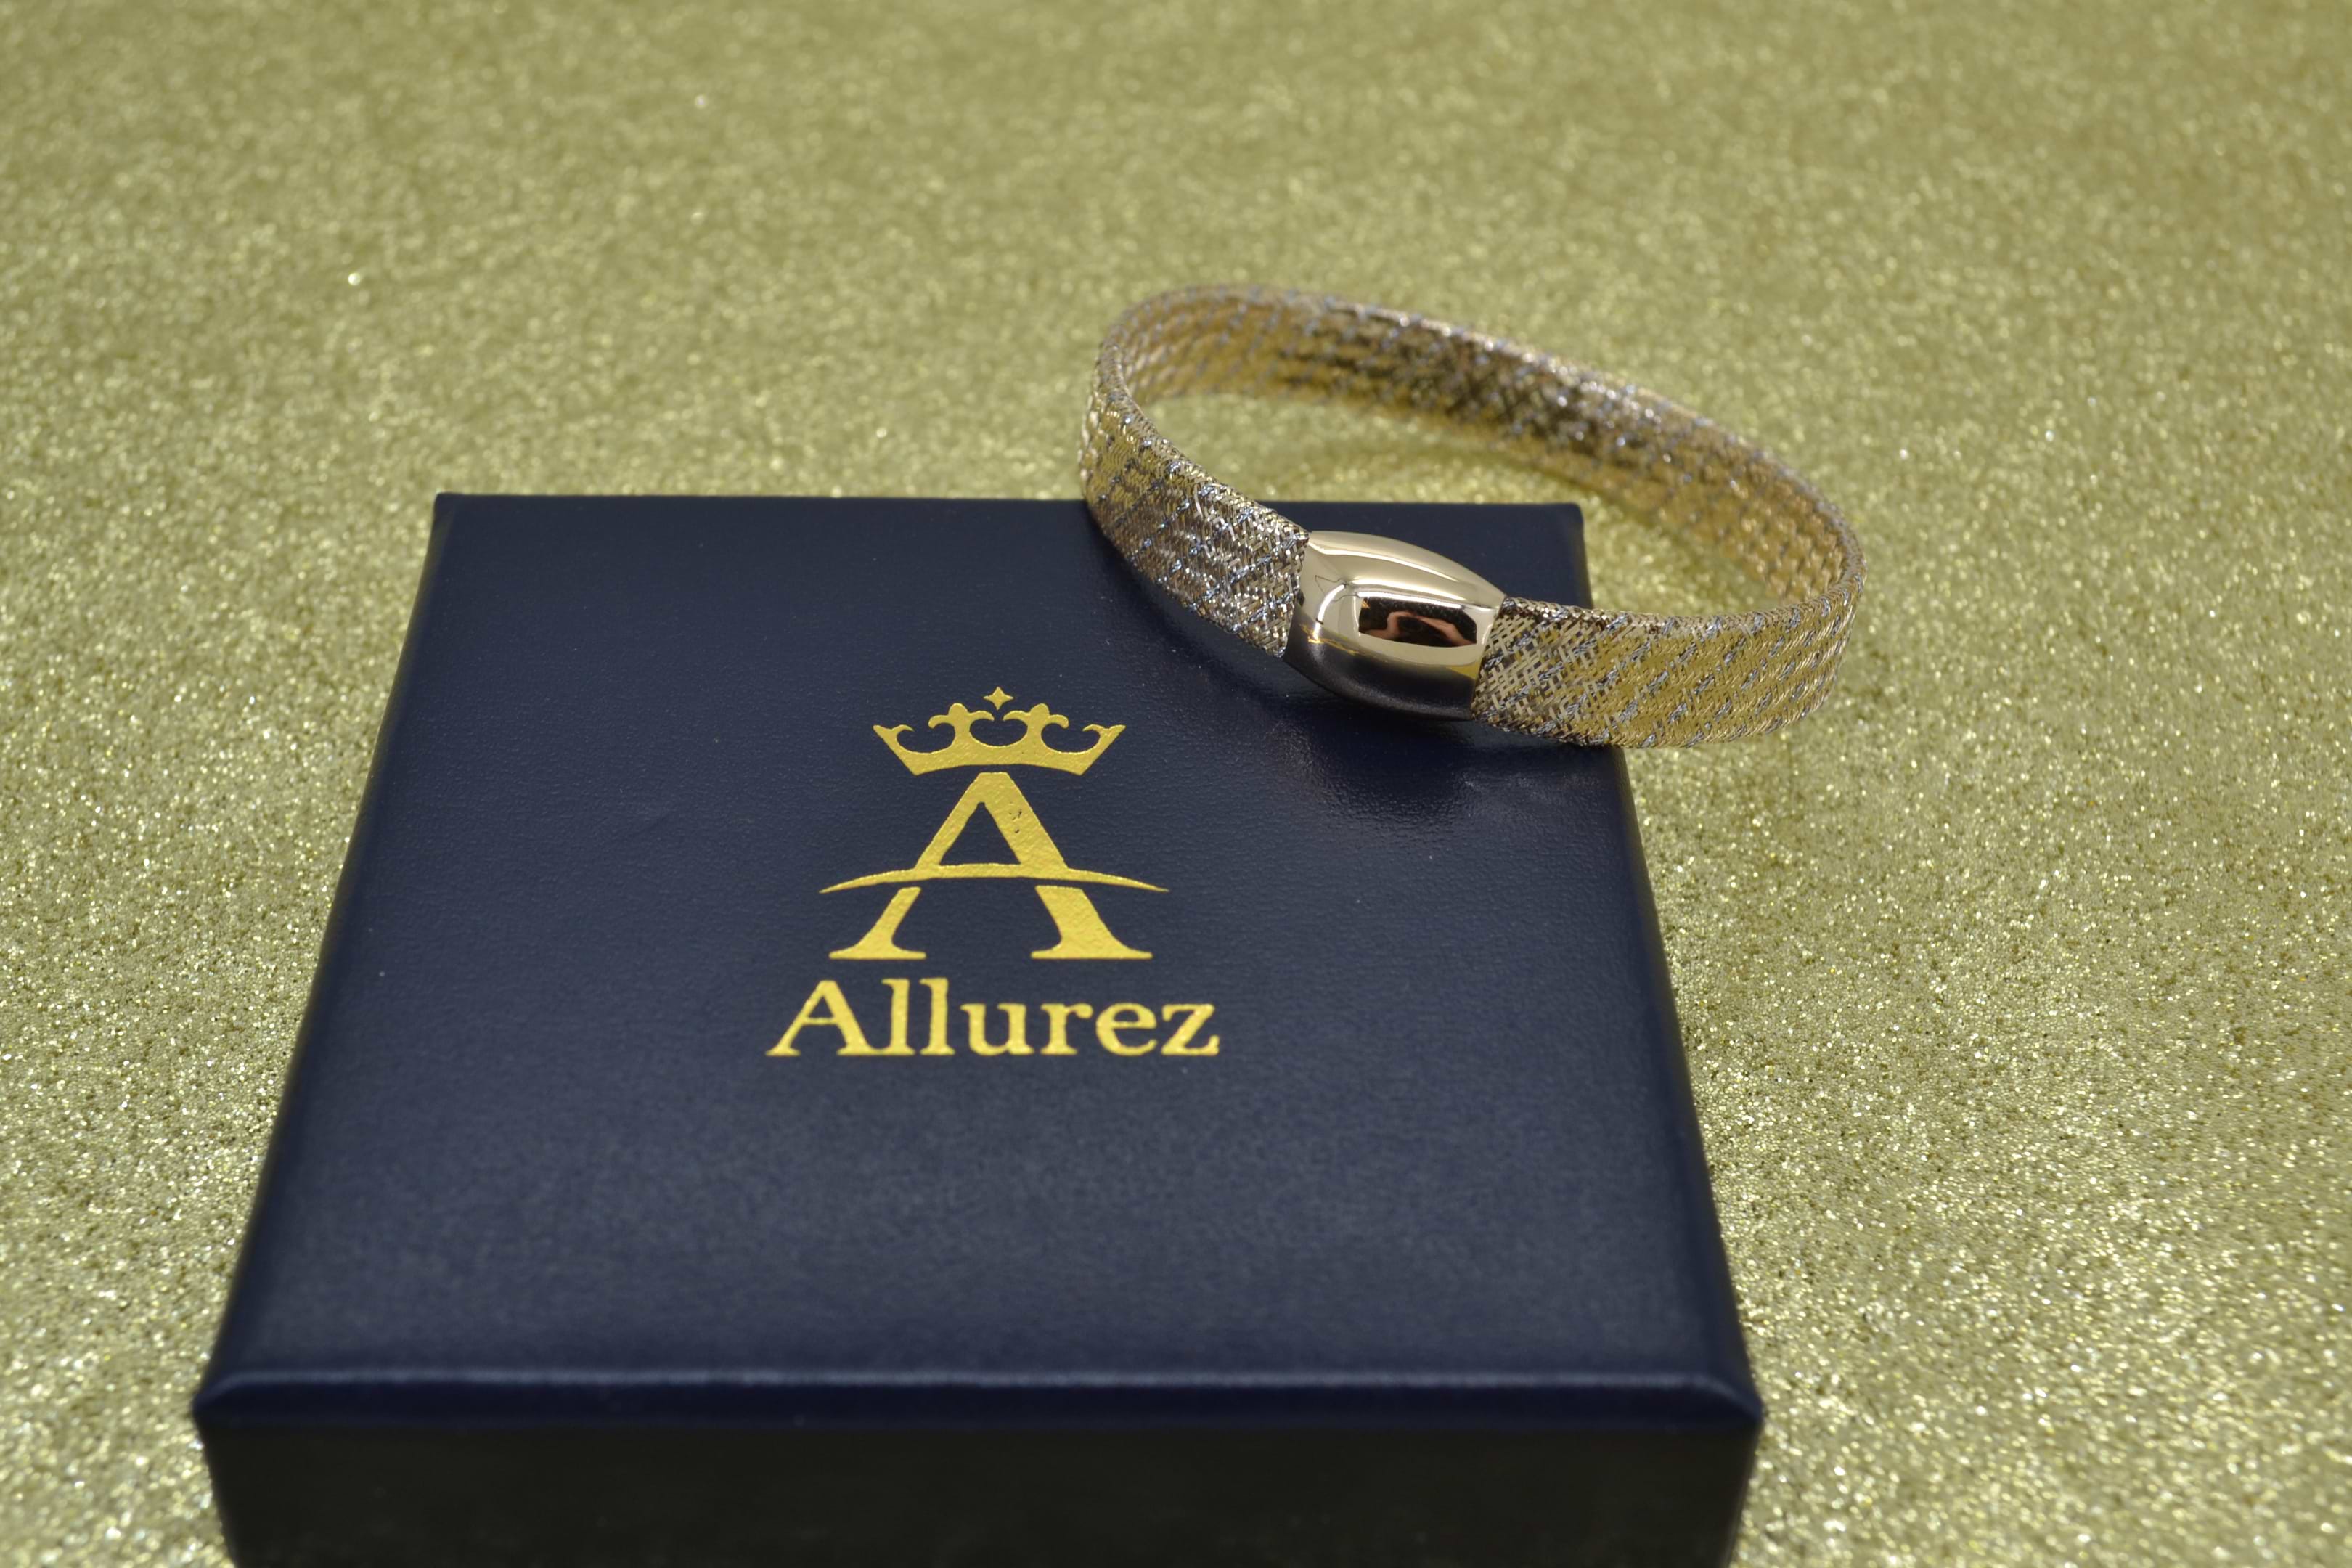 Flexible Woven Stretch Luxe Bangle Bracelet 14k Two-Tone Gold